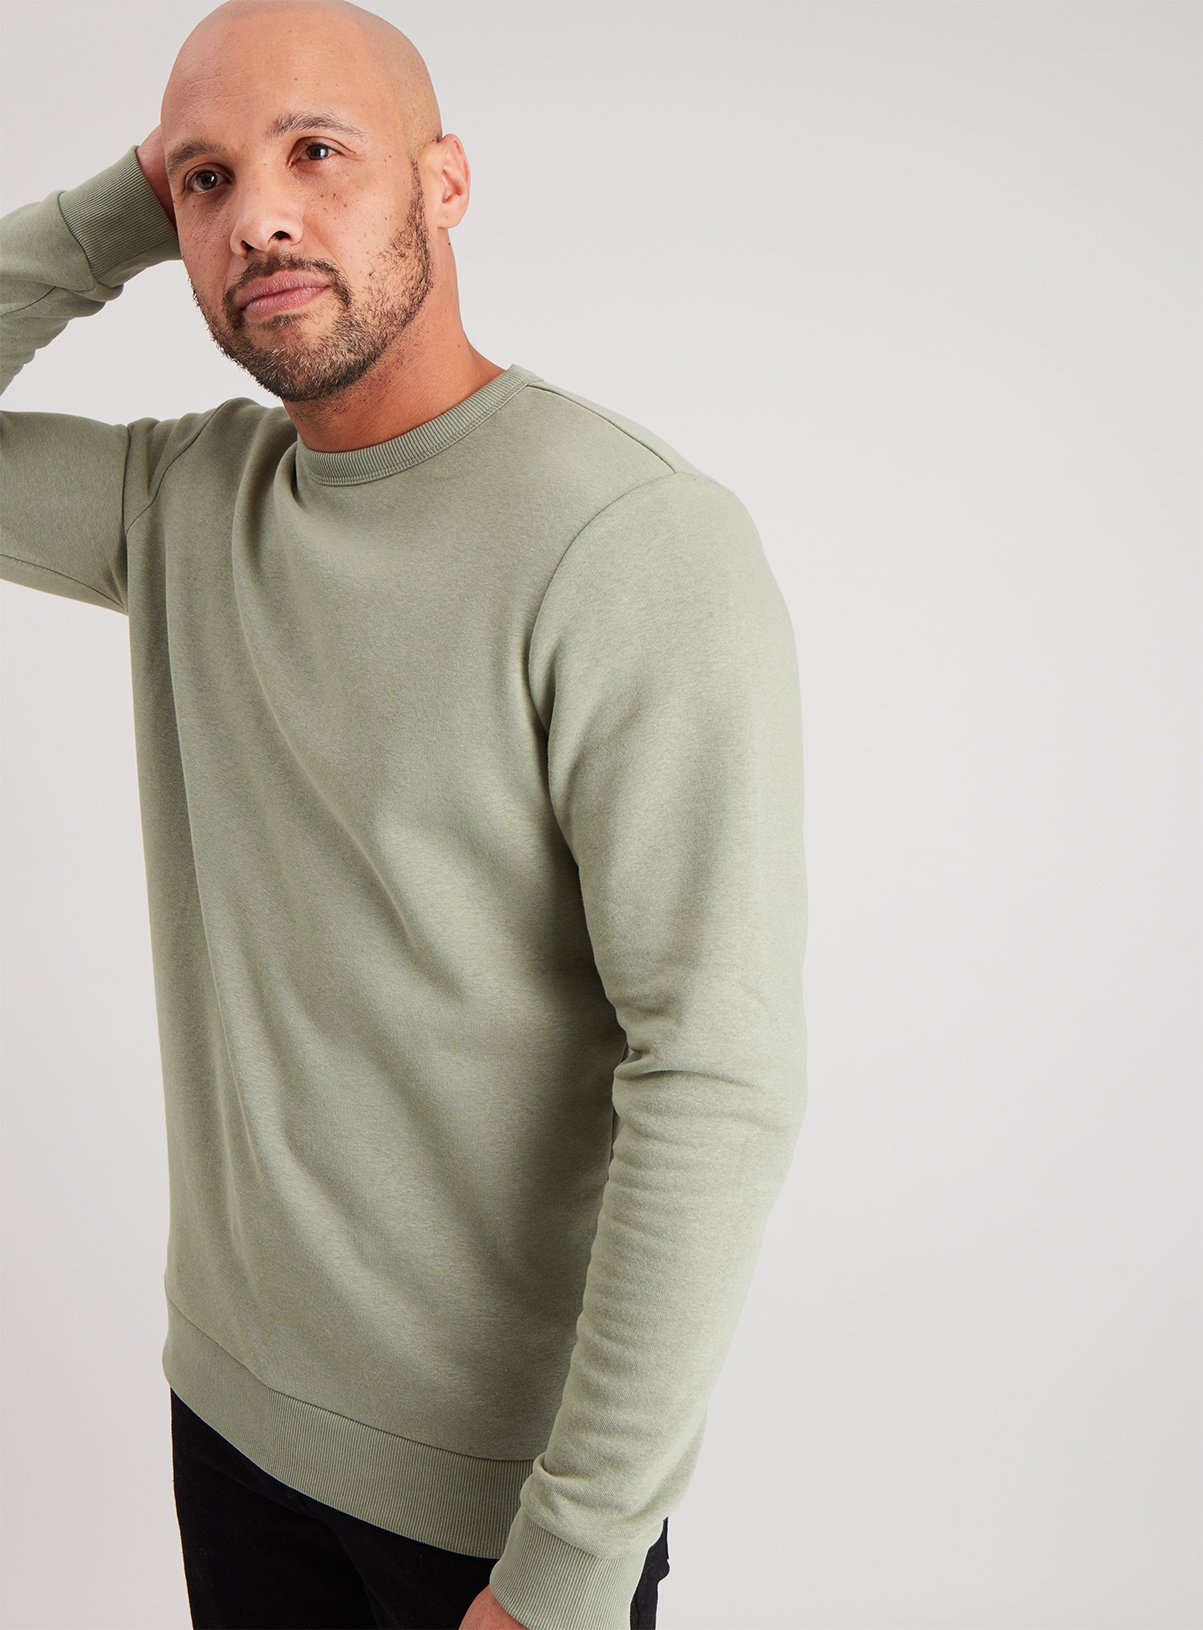 sage green sweatshirt